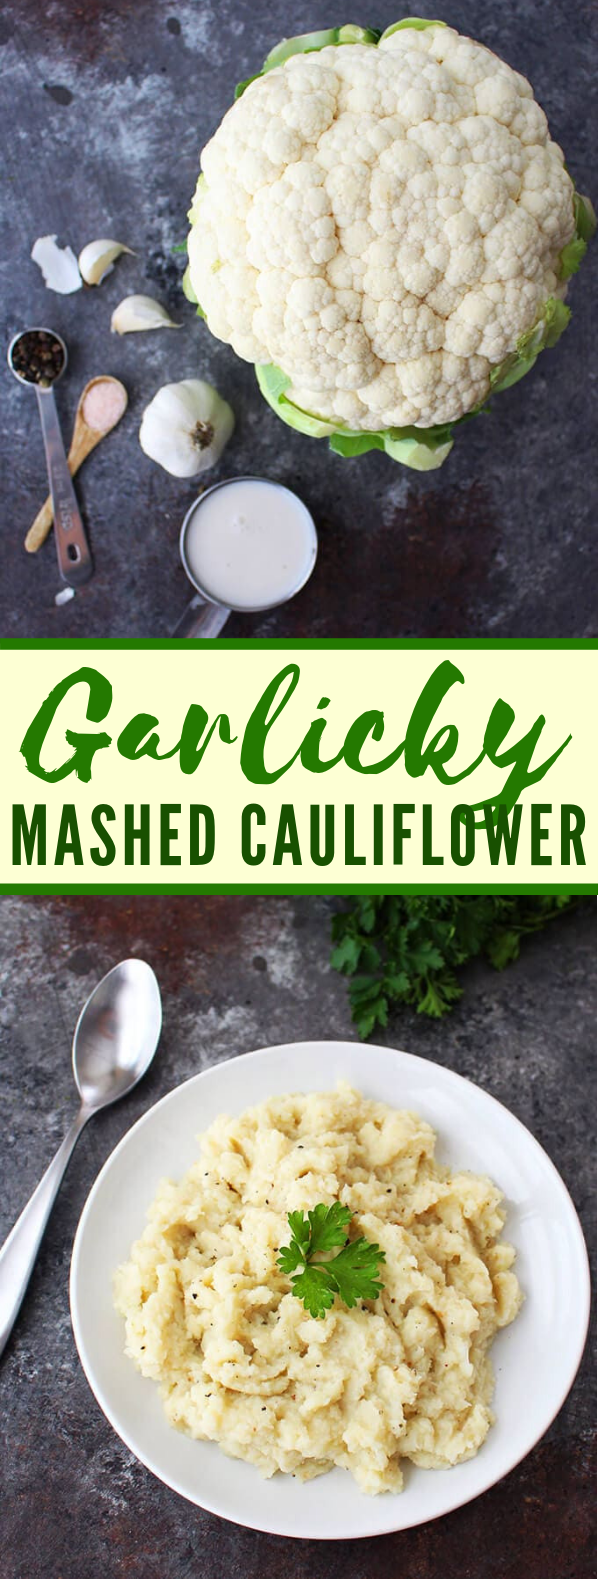 GARLICKY MASHED CAULIFLOWER